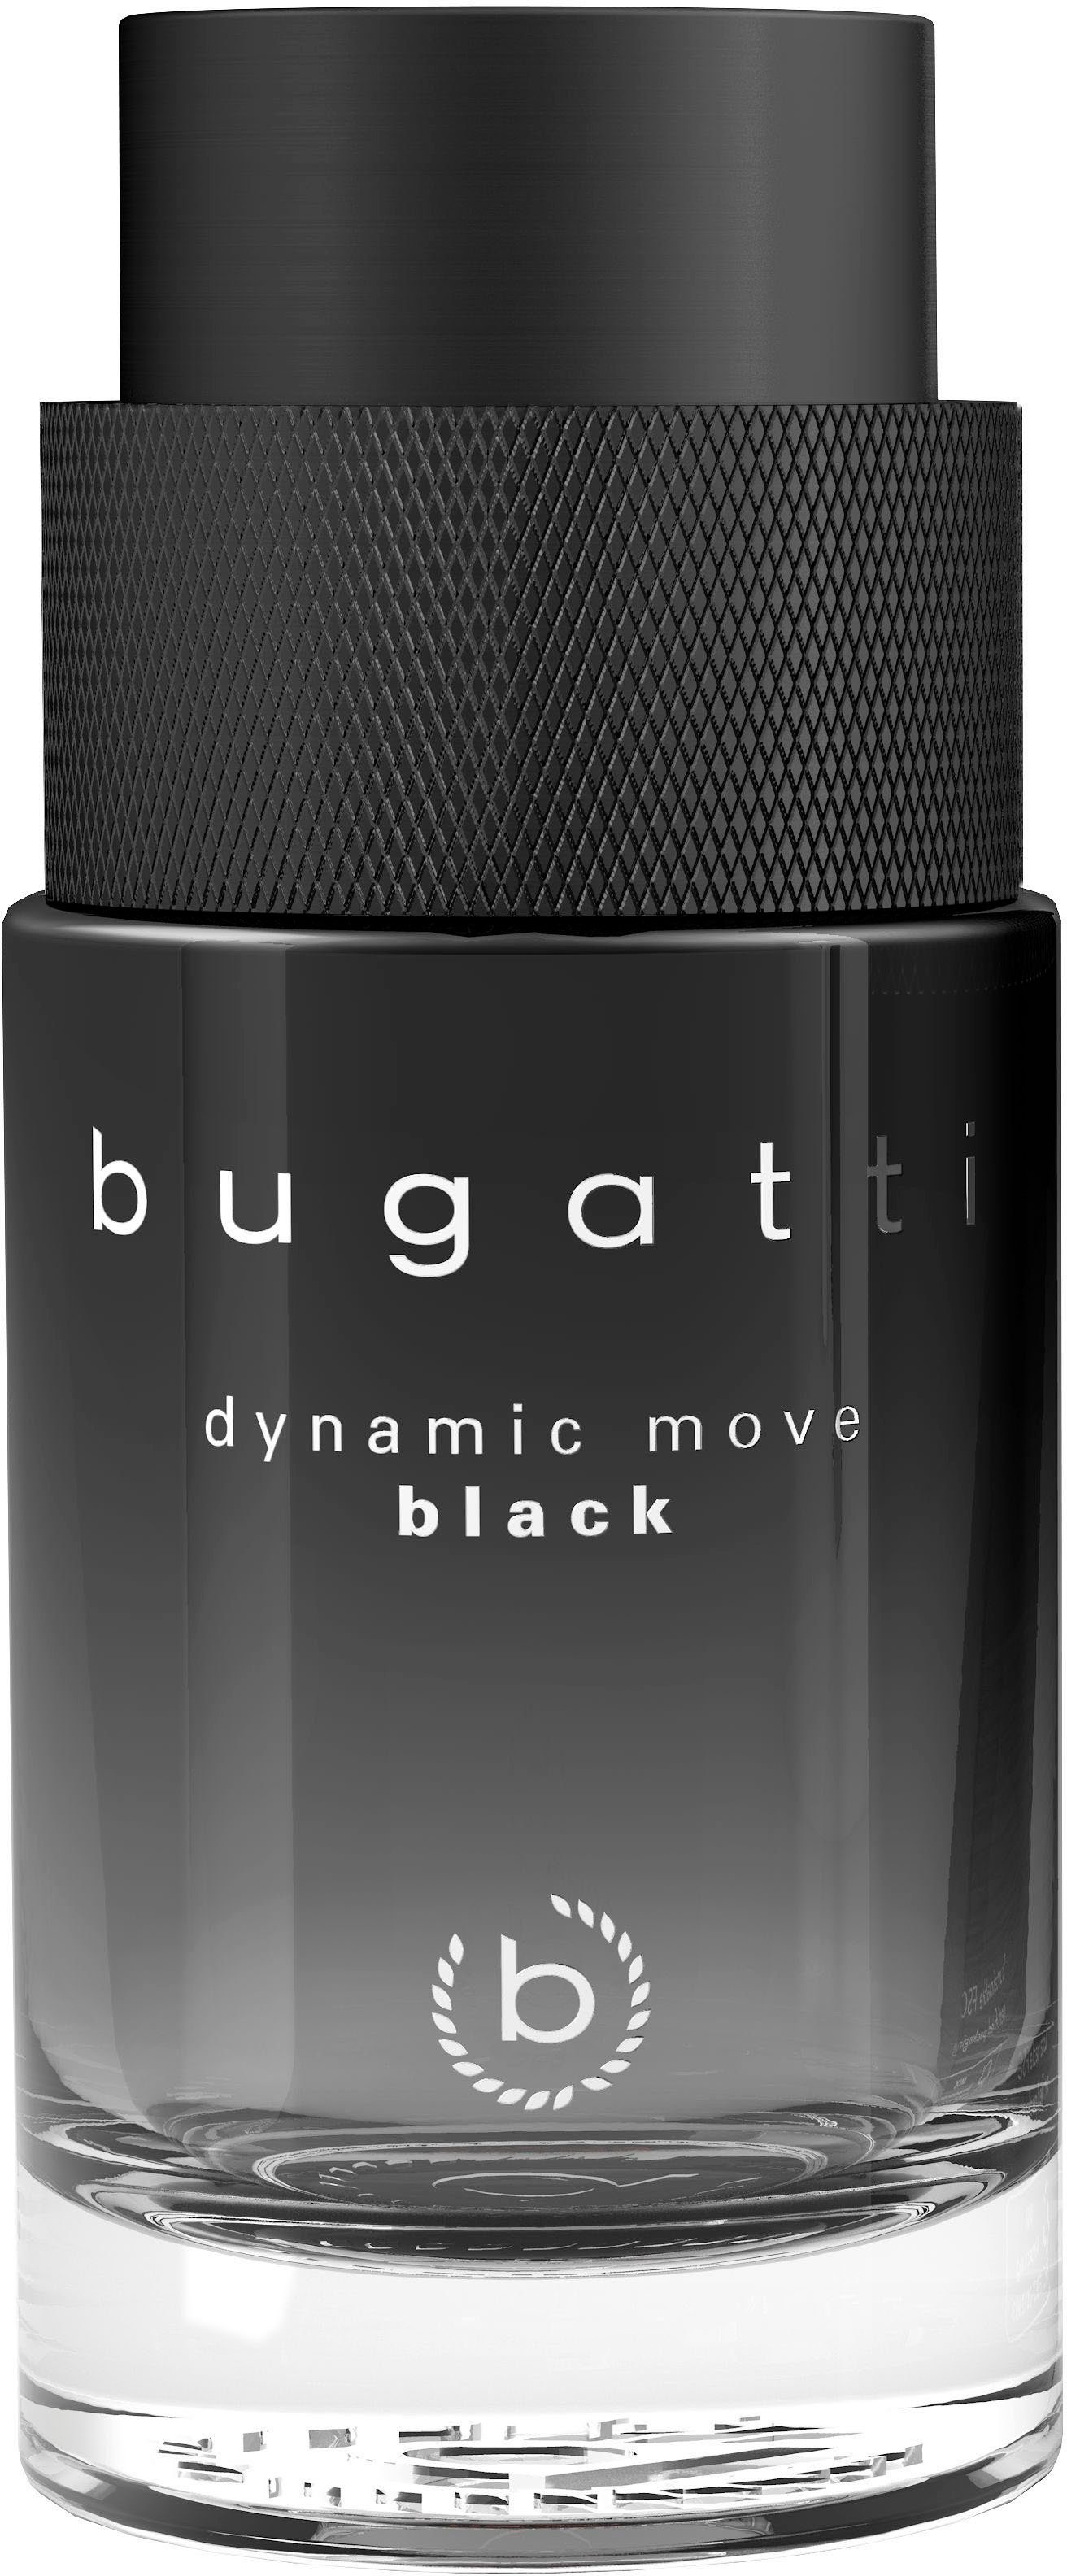 Black EdT bugatti Toilette Dynamic Move de Eau 100ml